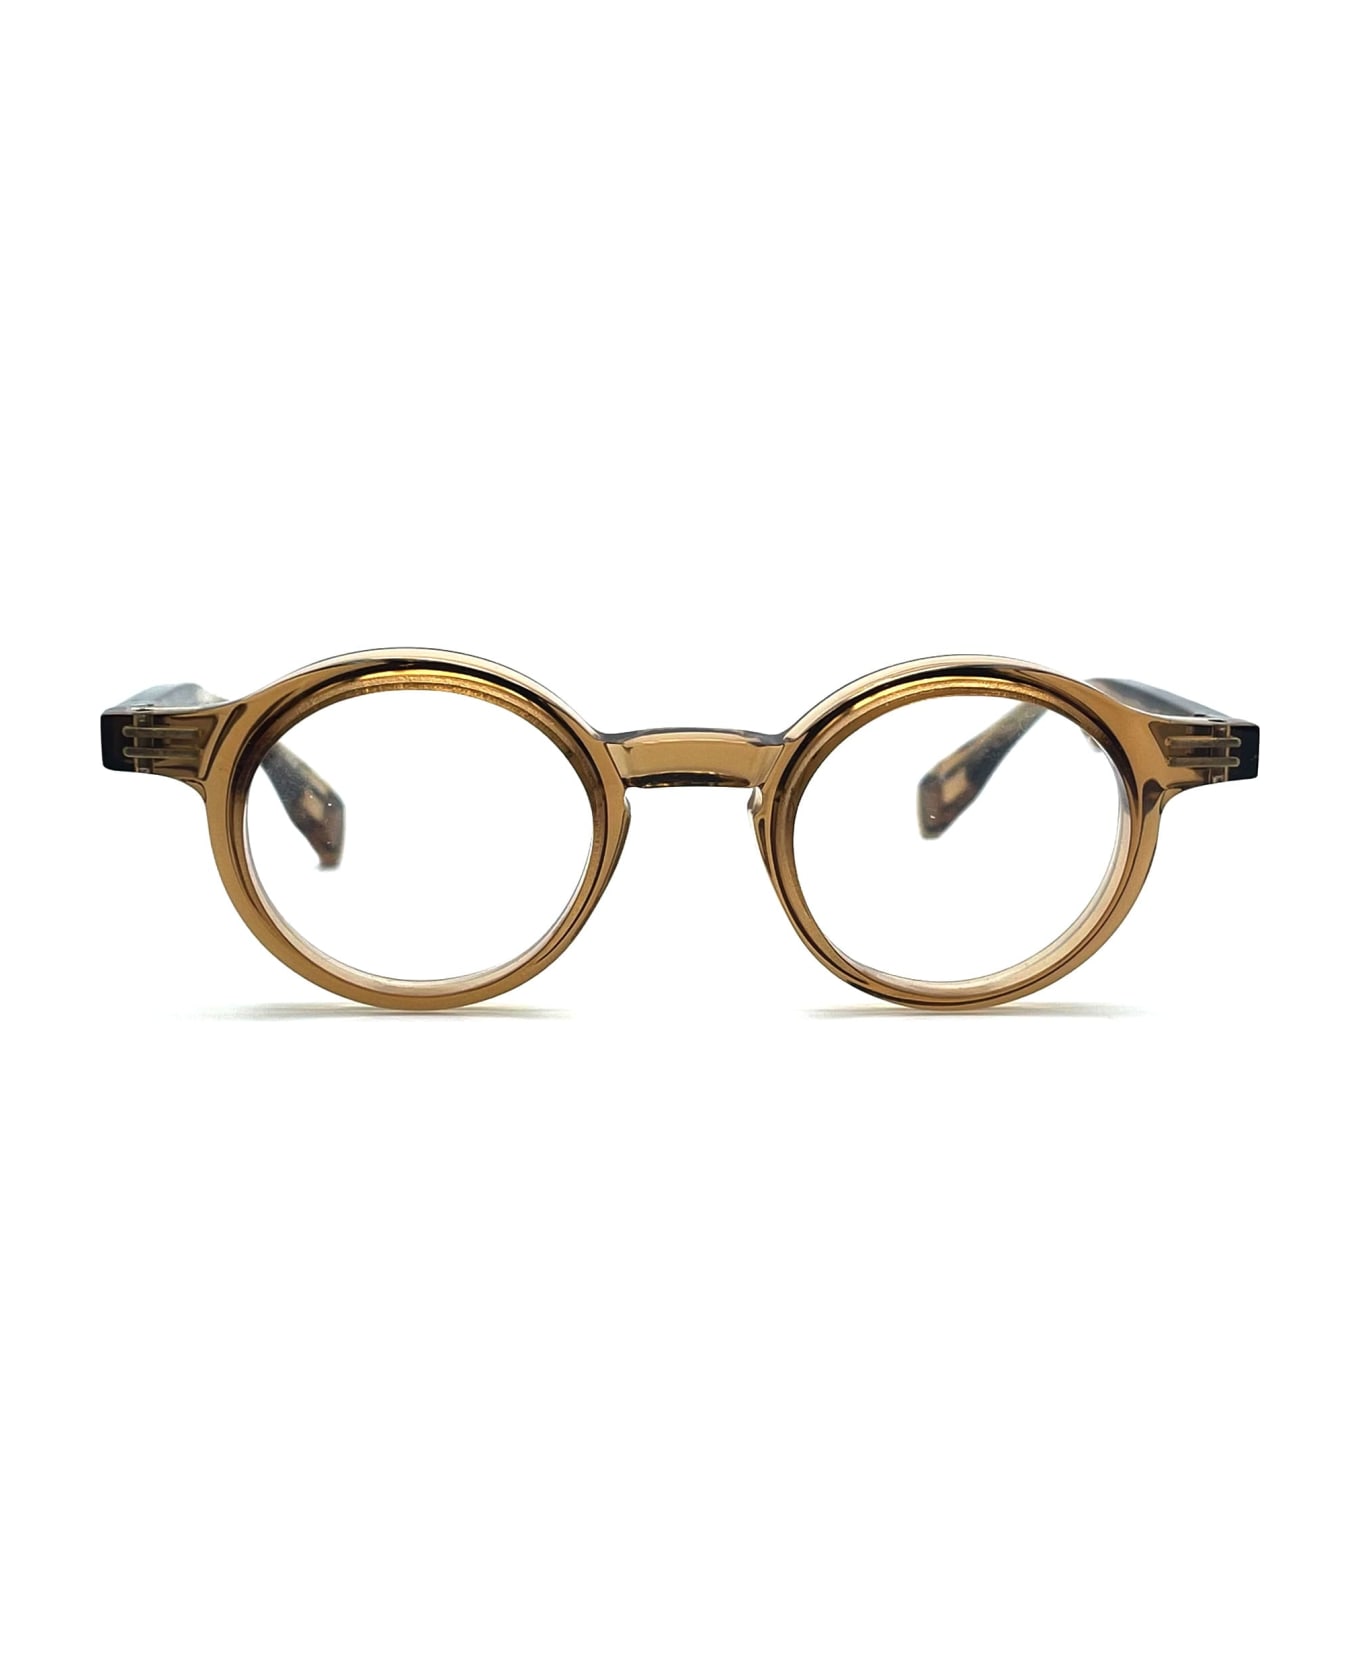 FACTORY900 Rf-018 - 893 Glasses - brown